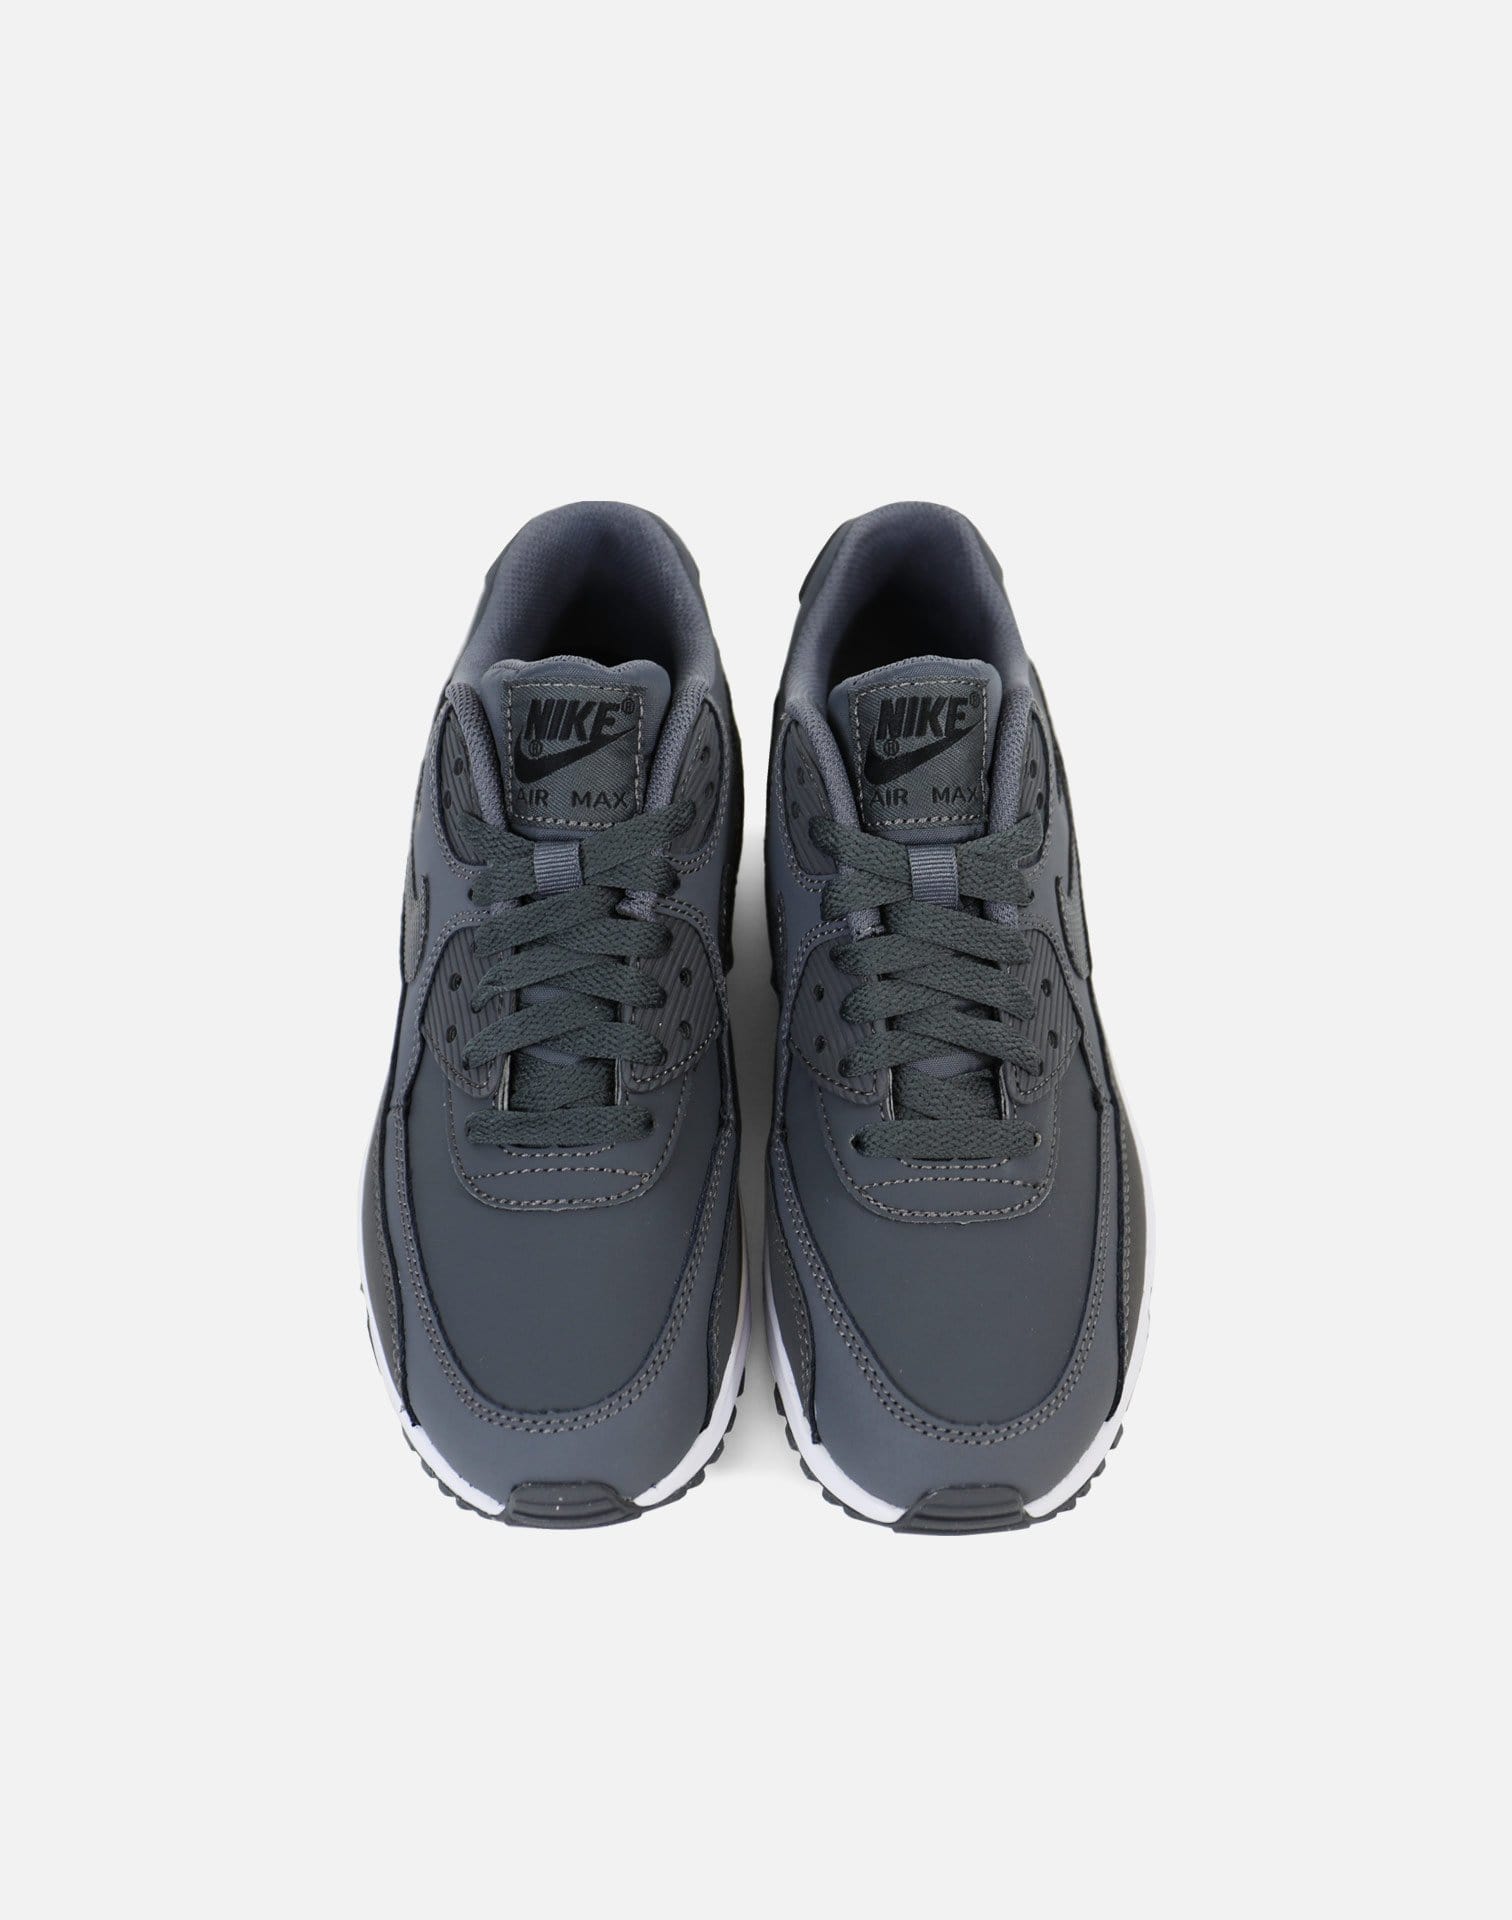 Nike Air Max '90 Leather Grade-School (Dark Grey/Dark Grey-Black)